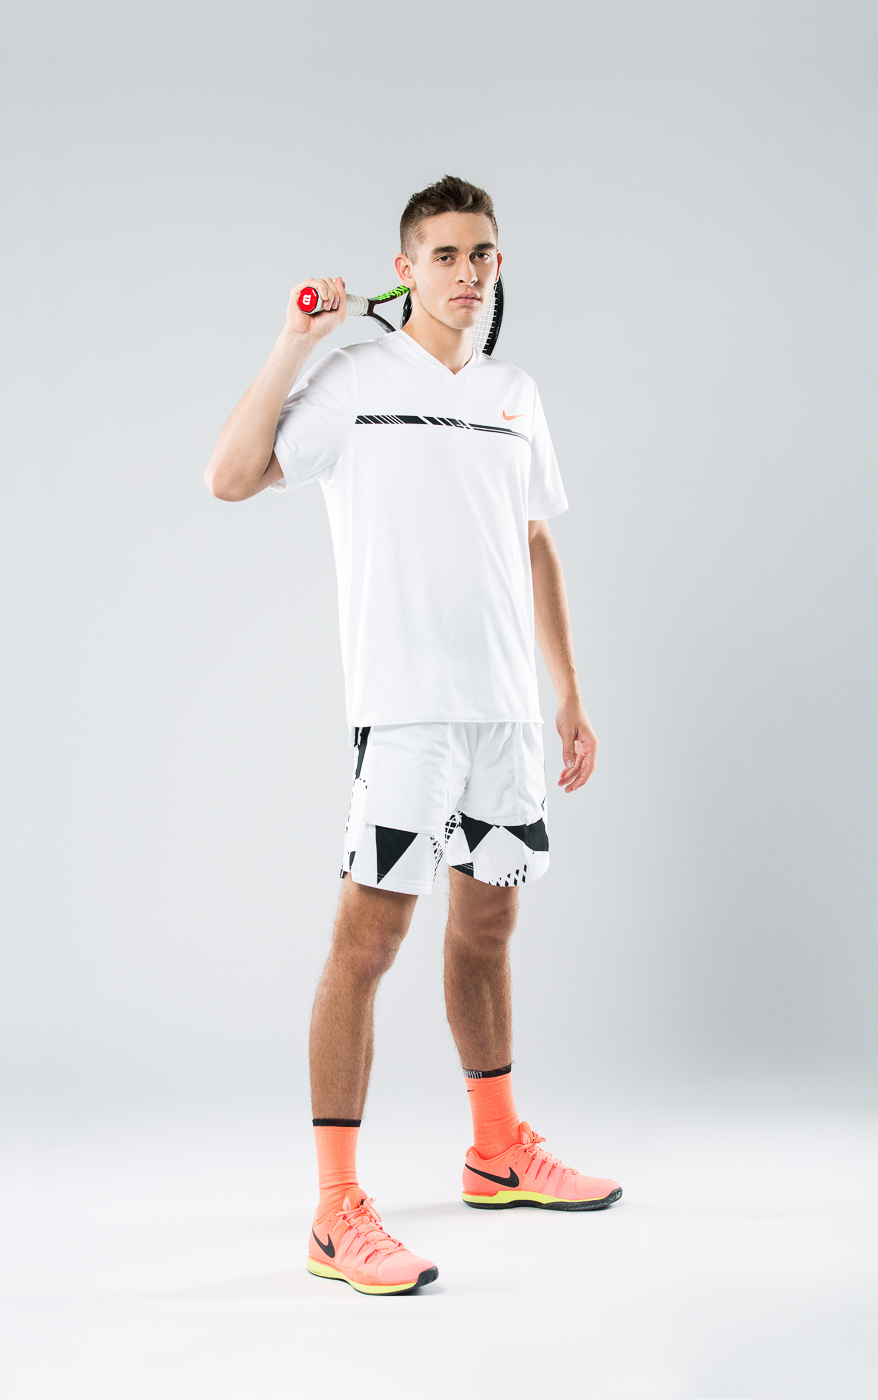 Portrait joueur équipe Tennis Canada Benjamin Sigouin